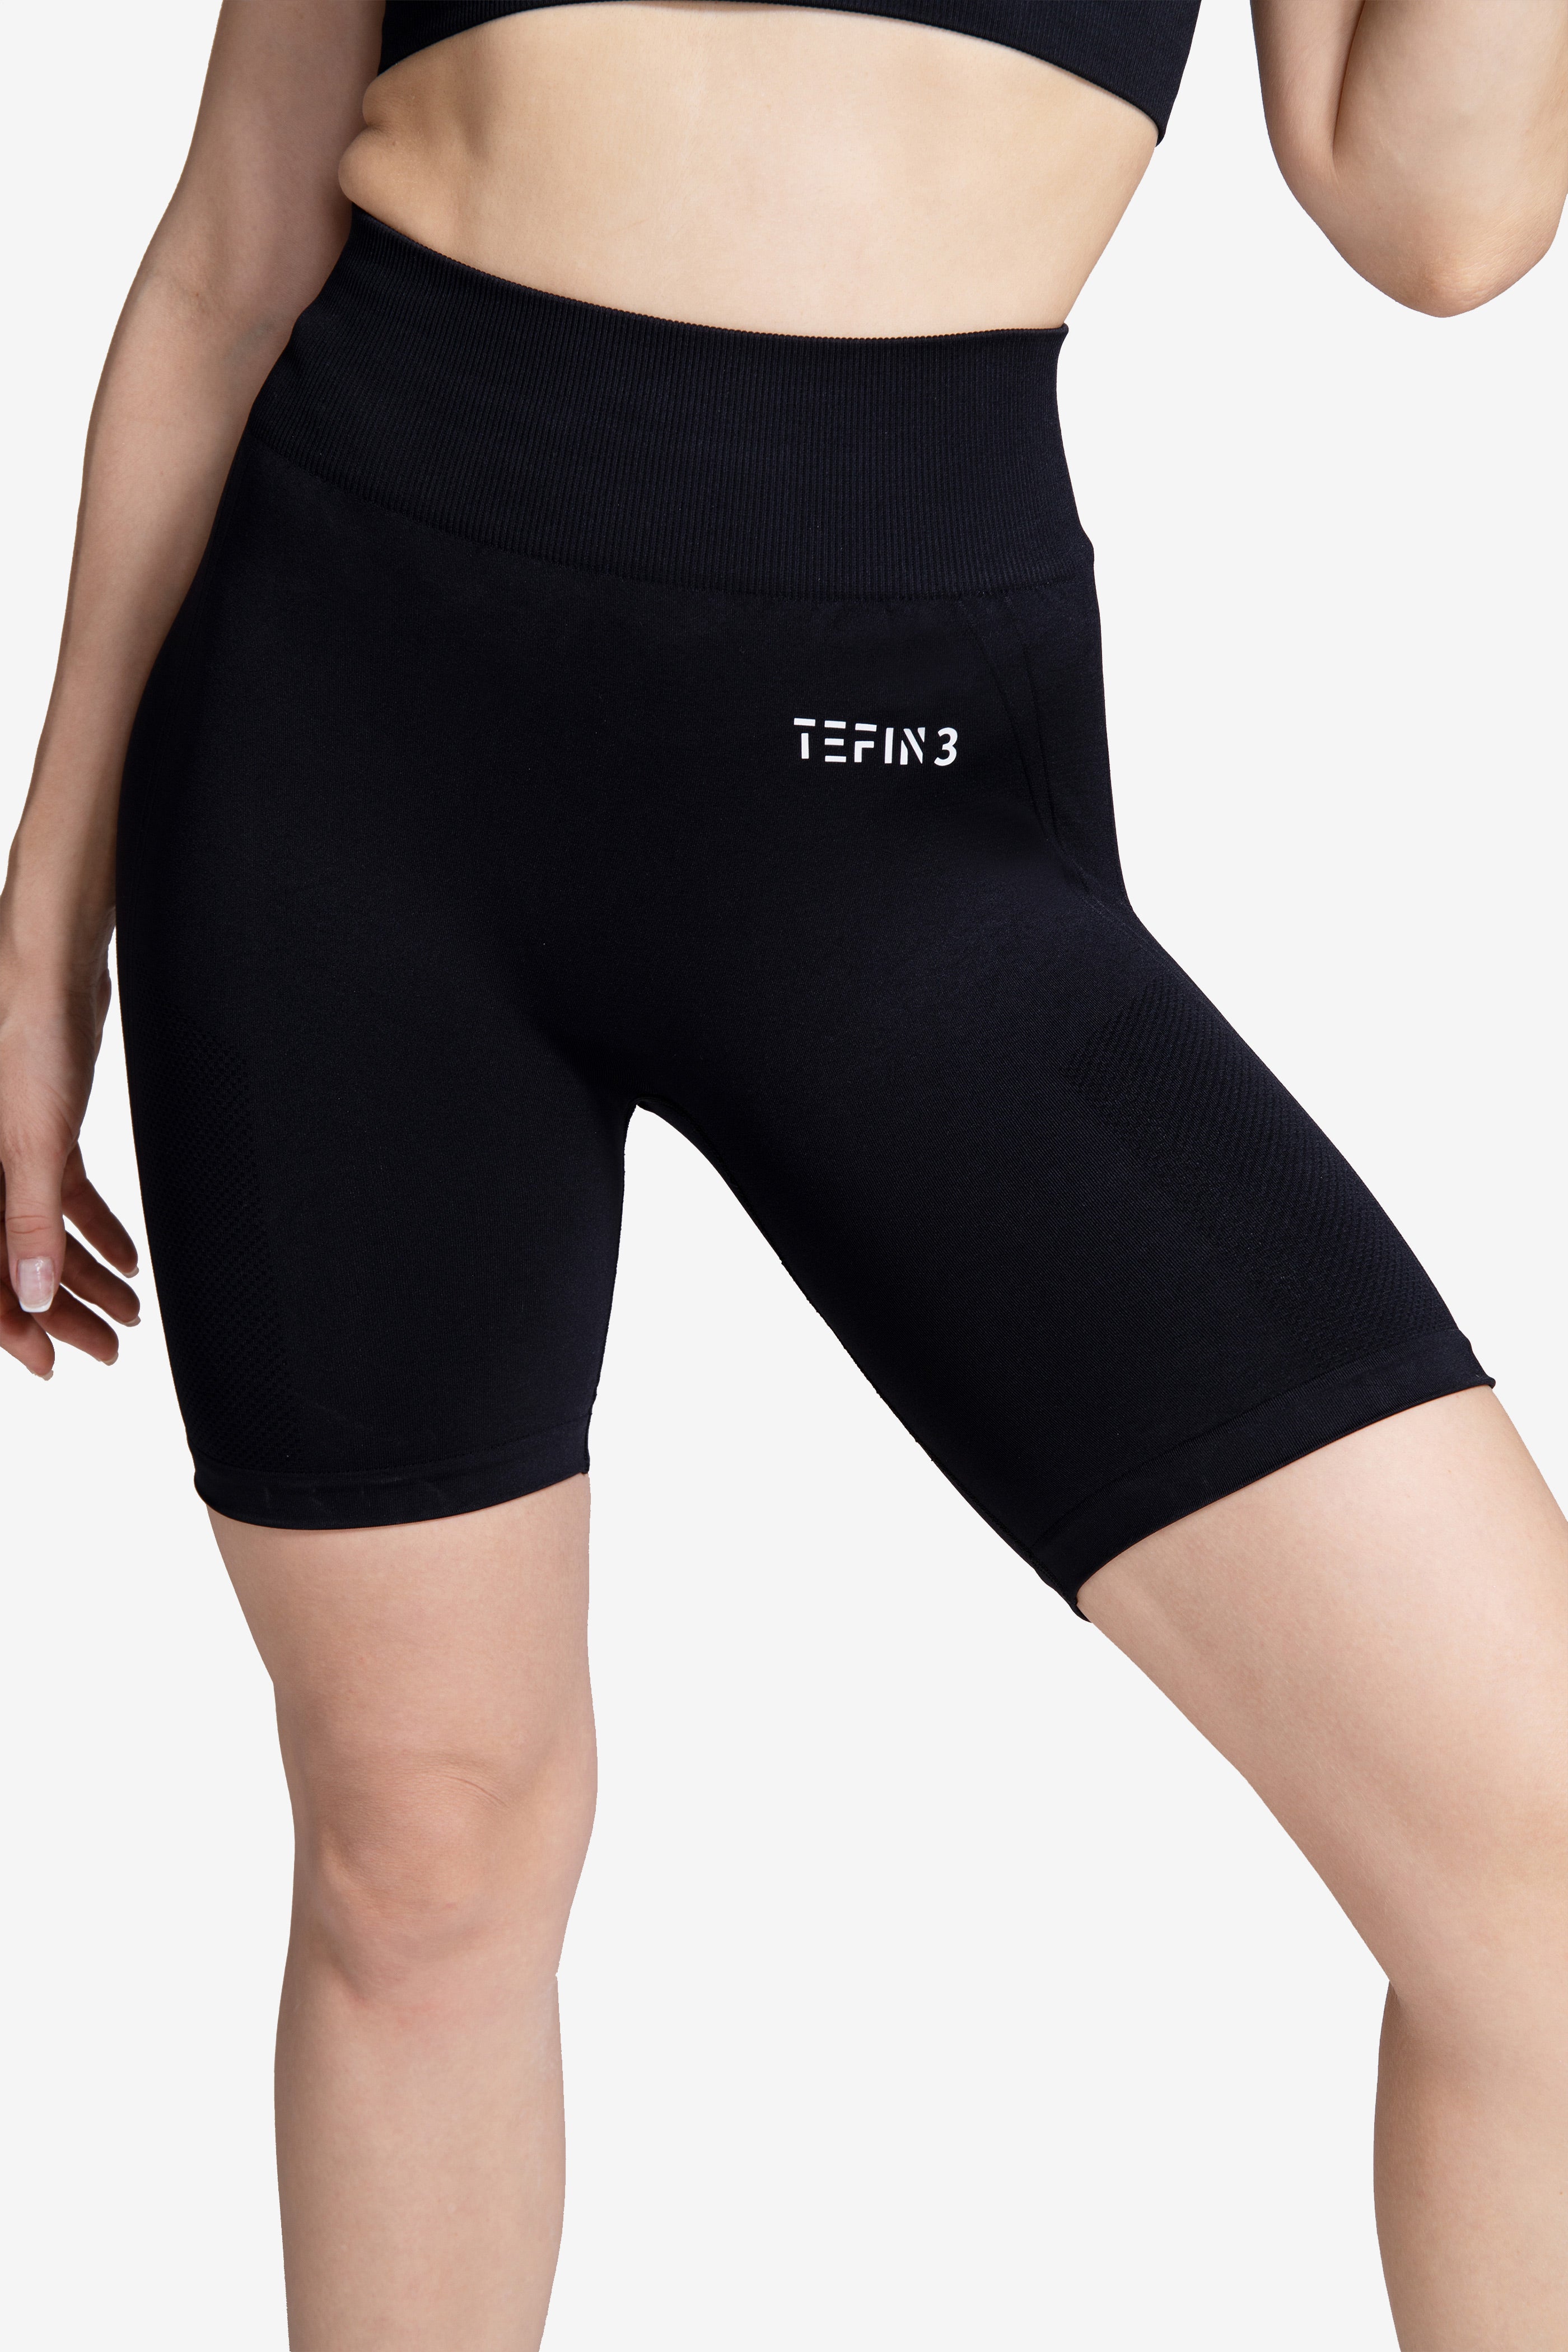 Shorts Workout TEFIN3 Black Comfy Seamless Women